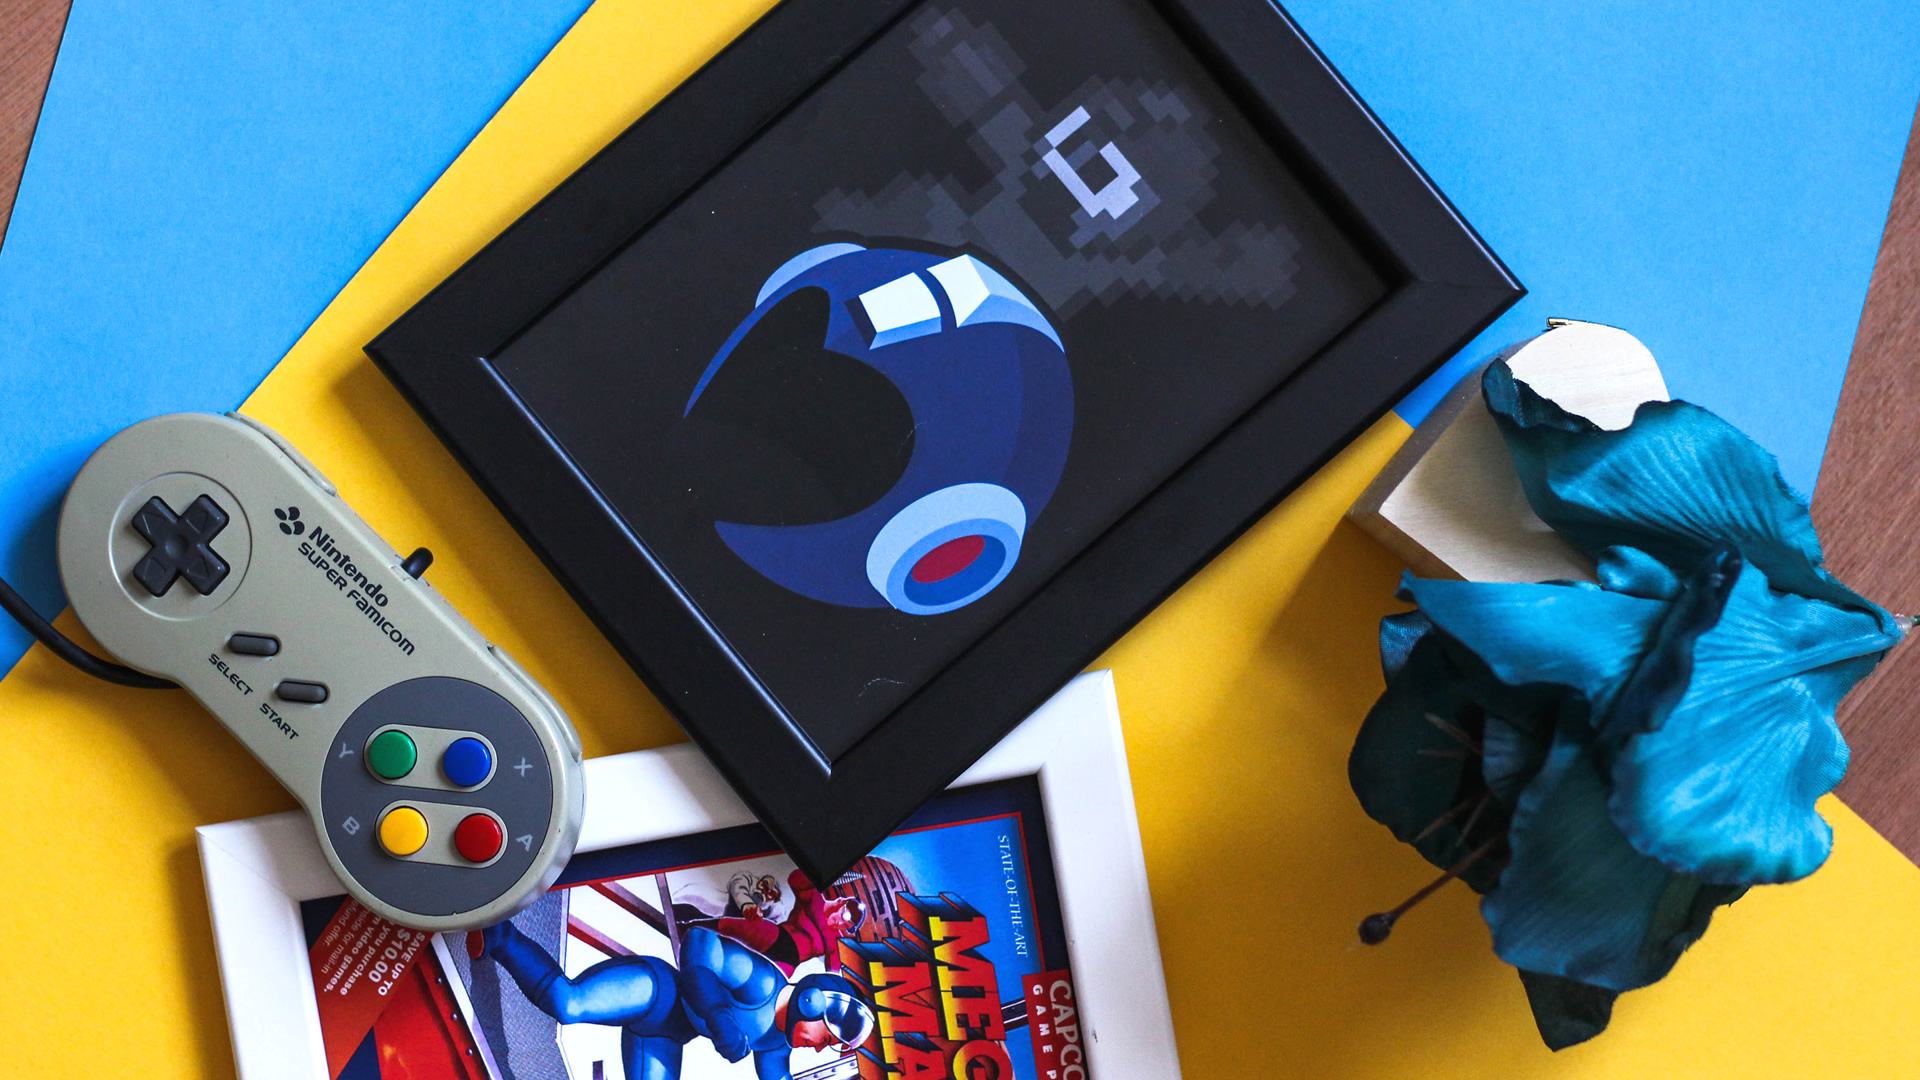 Why is Mega Man Blue? 6 Mega Man Facts